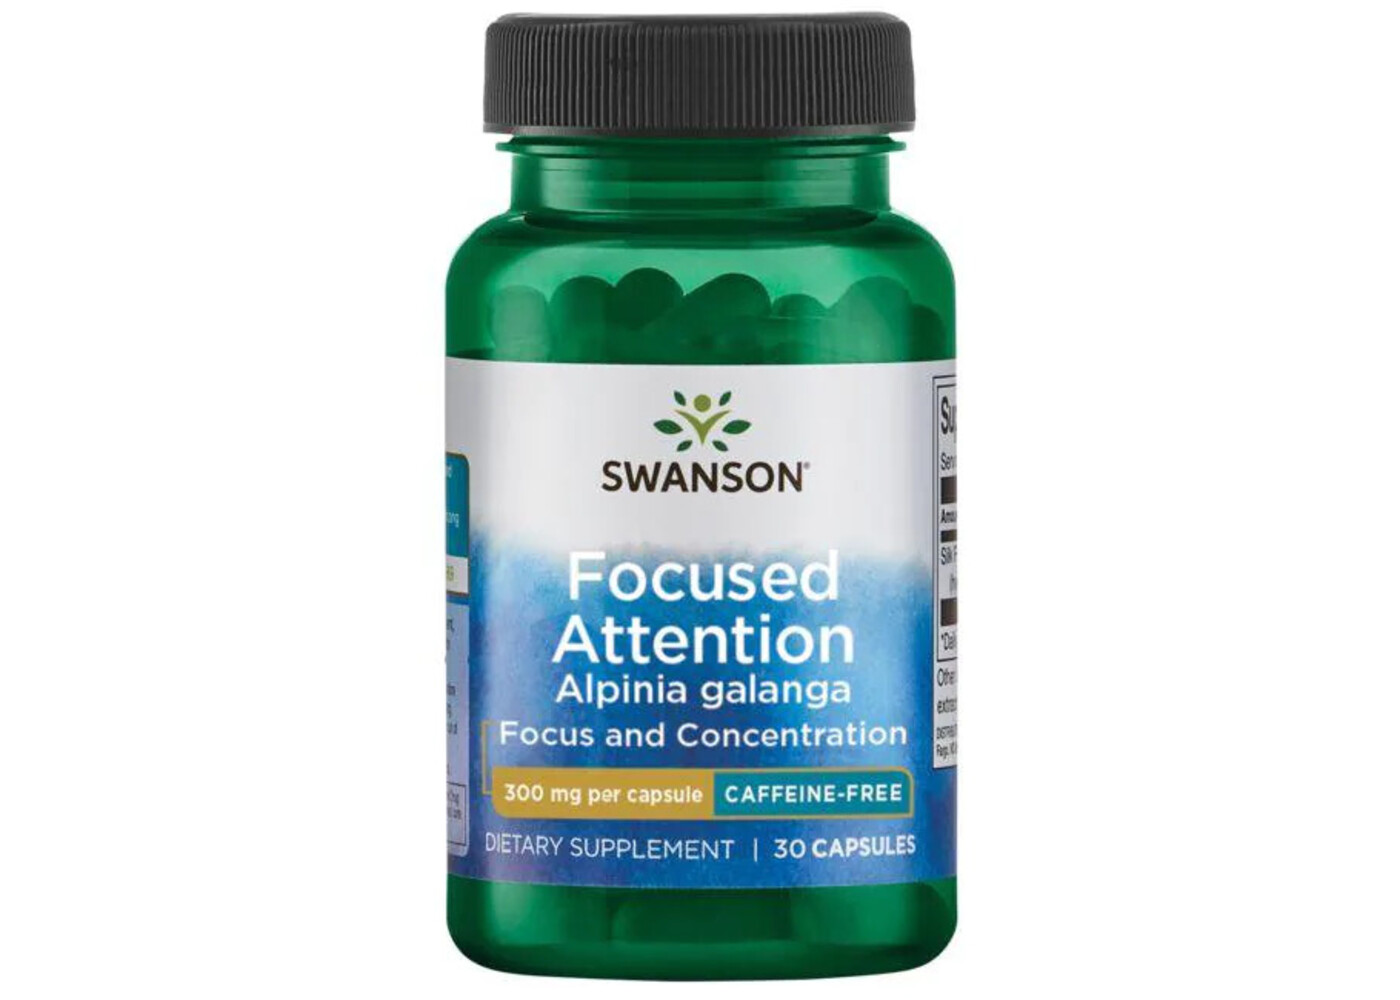 Swanson Focused Attention Alpinia Galanga - Caffeine-Free, 300 mg 30 Caps